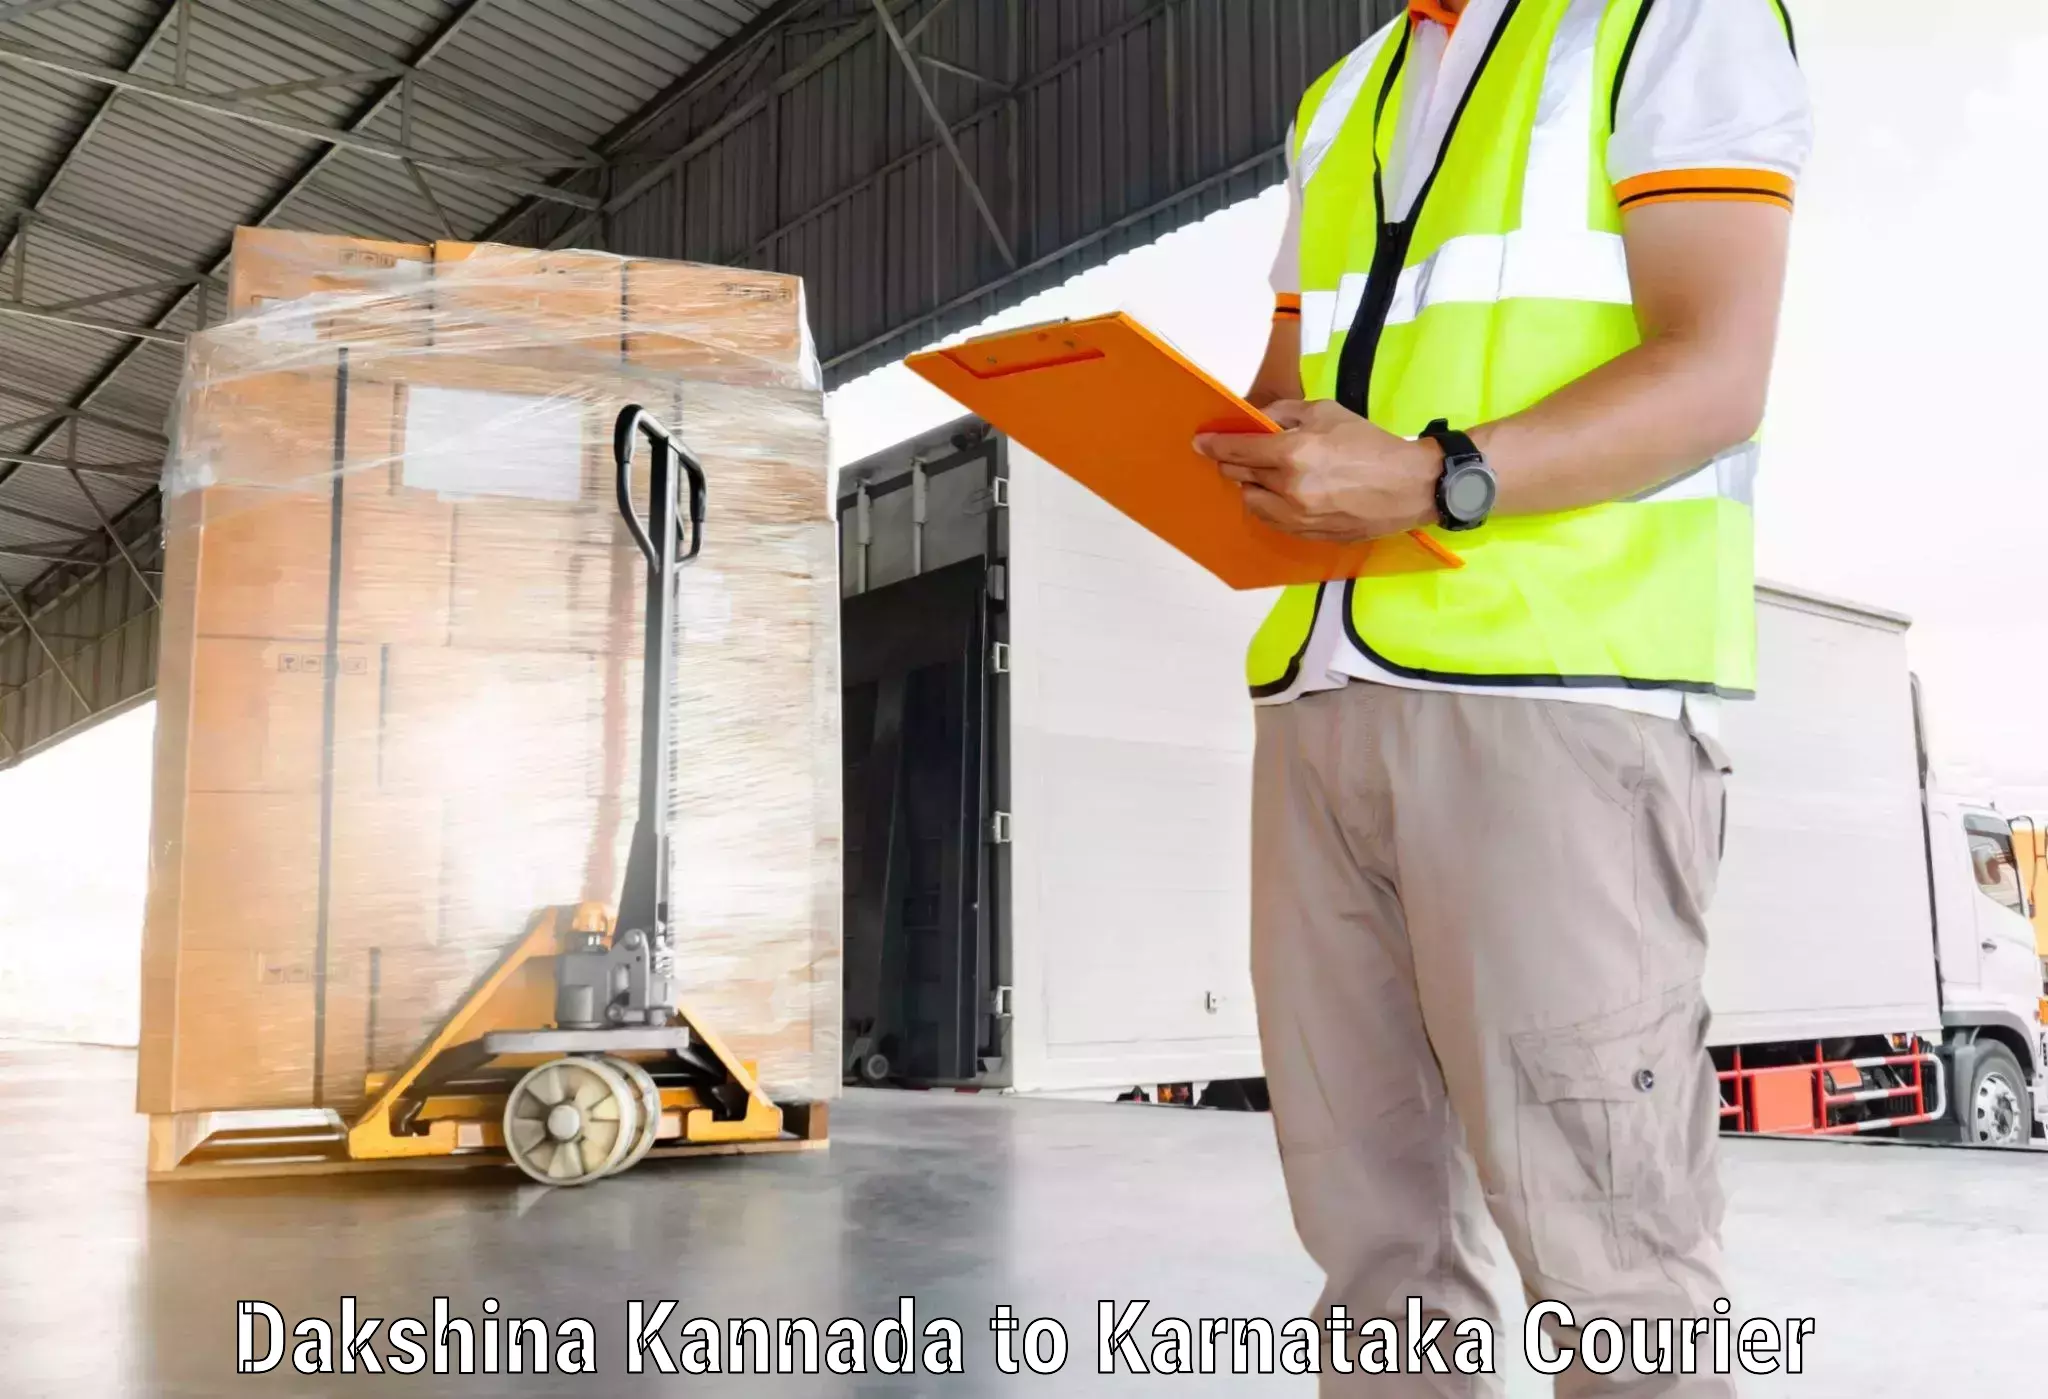 Express delivery capabilities Dakshina Kannada to Maddur